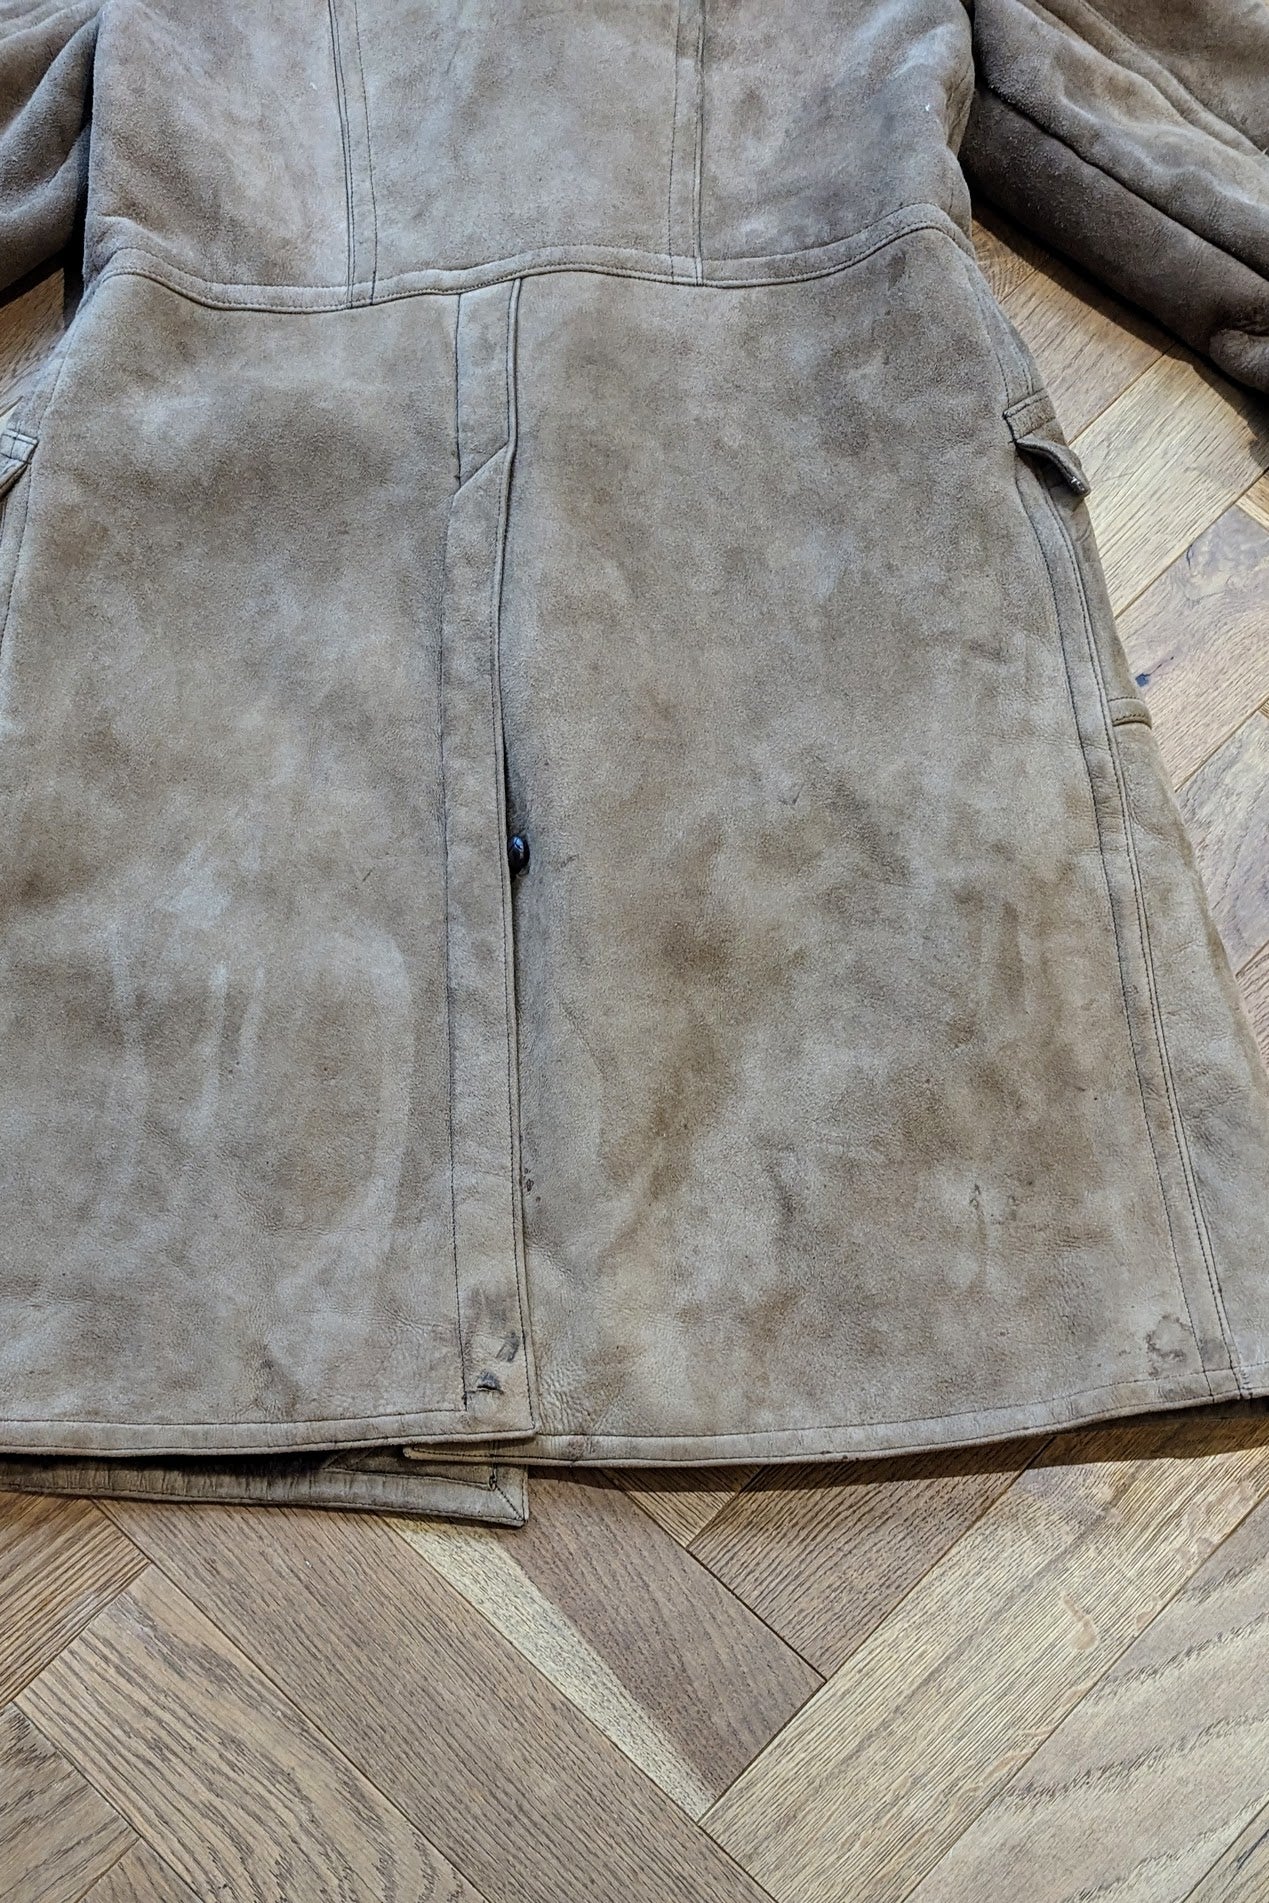 minor marks to sheepskin coat